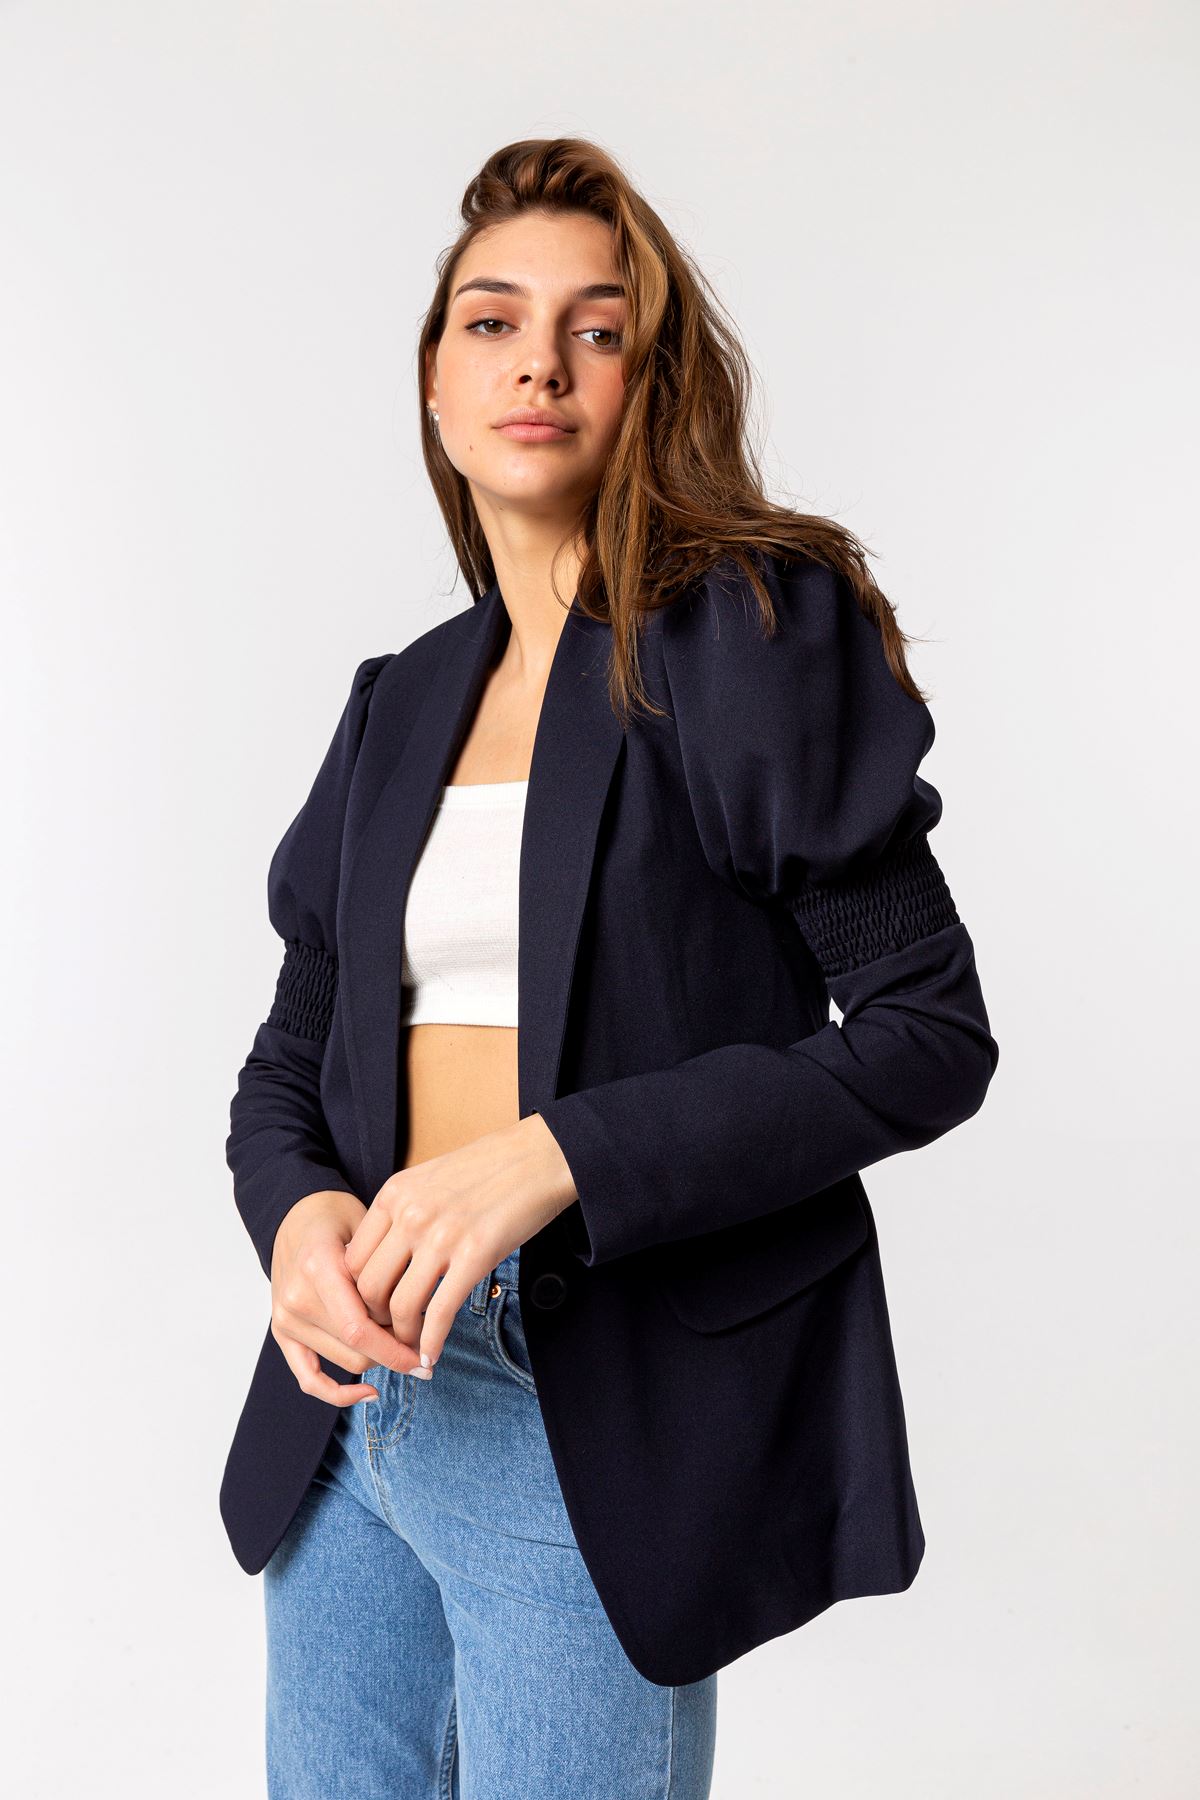 Licra Fabric Long Sleeve Revere Collar Hip Height Classical Women Jacket - Mint